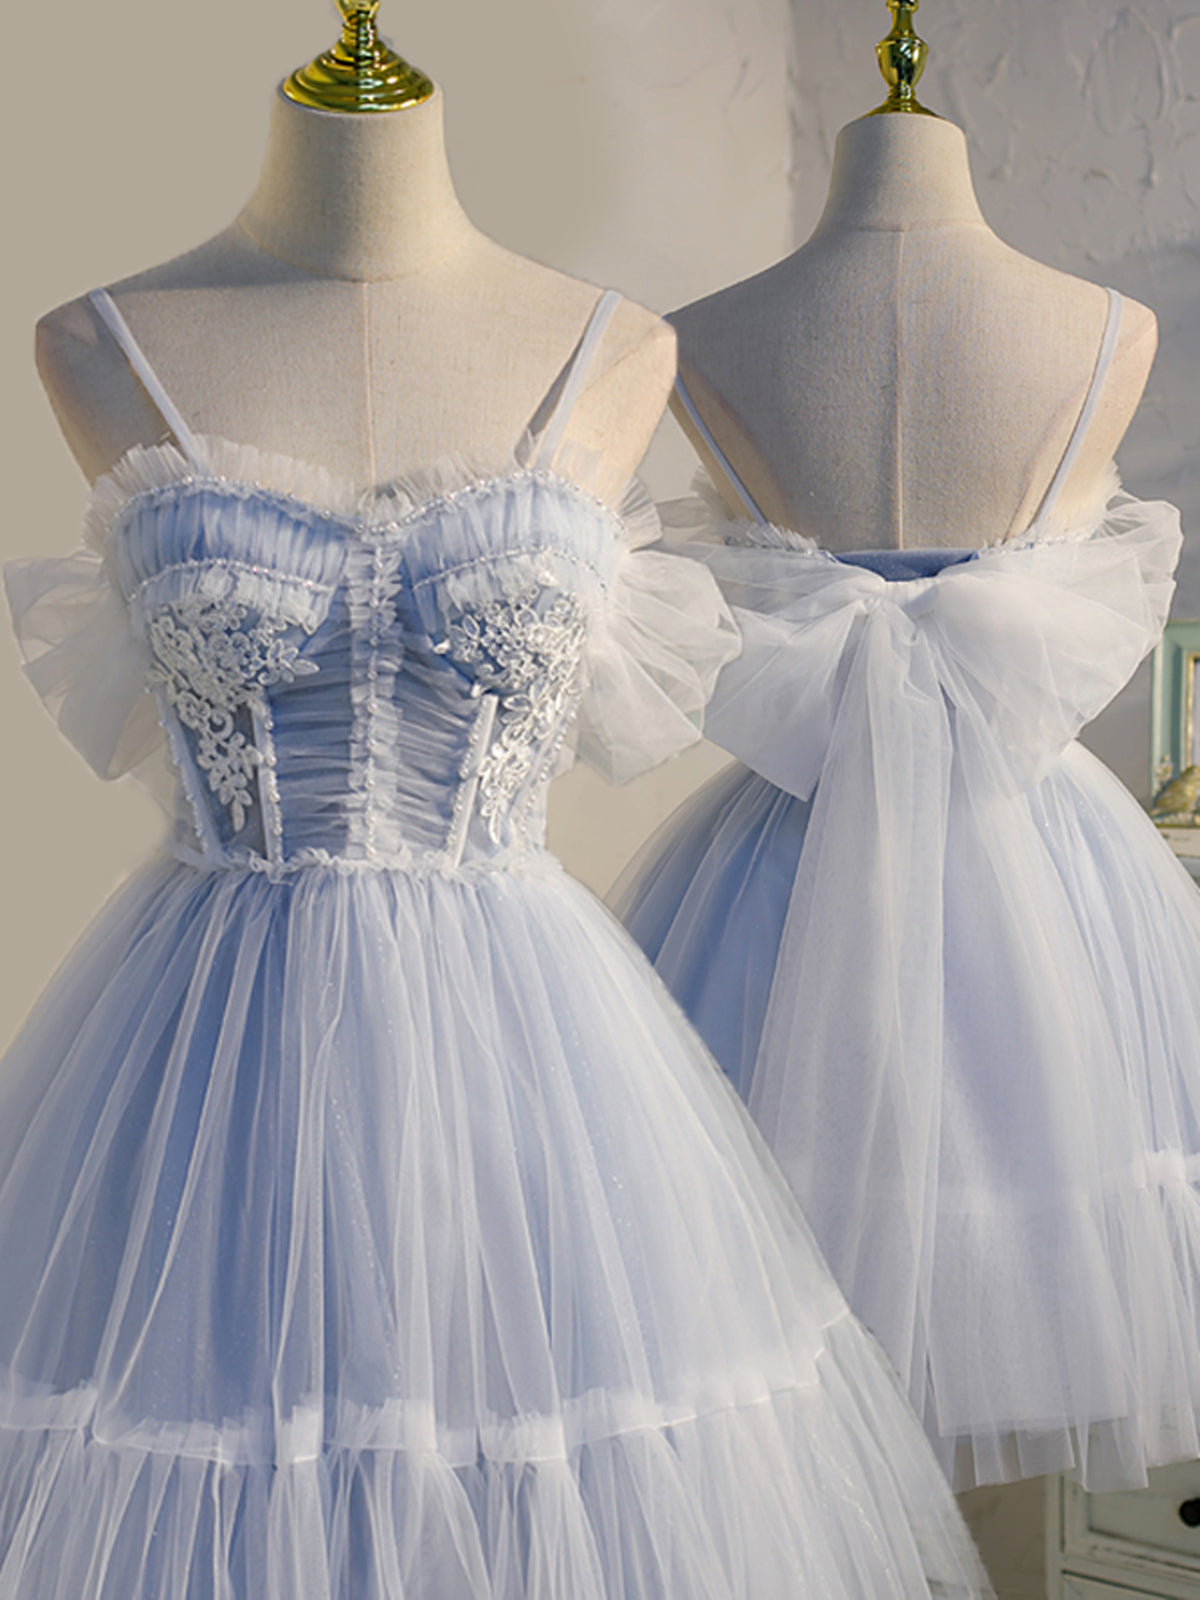 Short Off the Shoulder Light Blue Prom Dresses For Black girls For Women, Light Blue Formal Homecoming Dresses